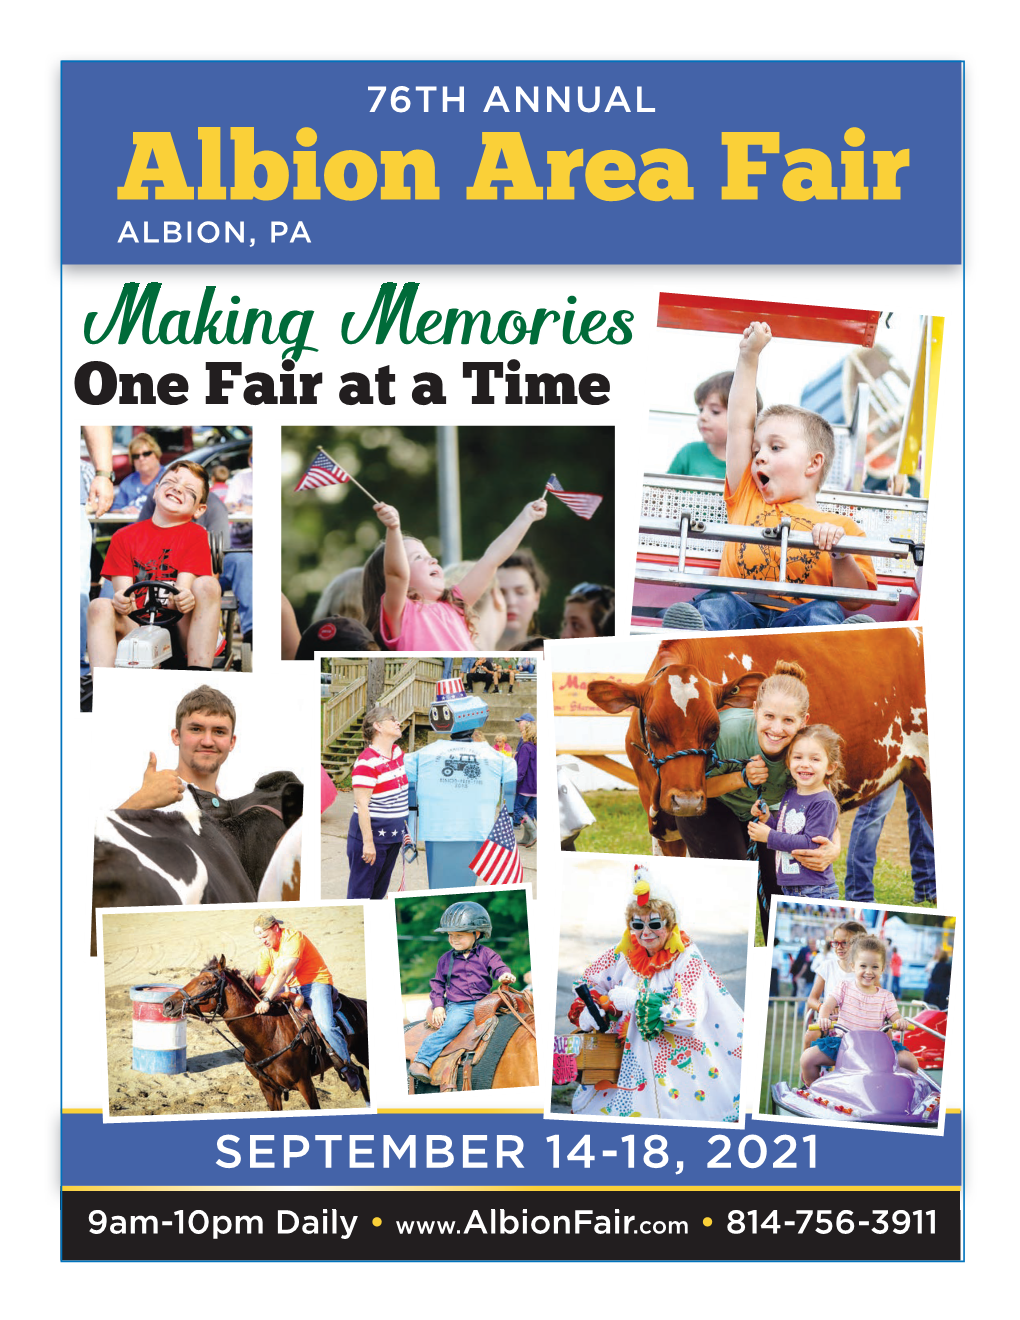 Albion Area Fair ALBION, PA Making Memories One Fair at a Time